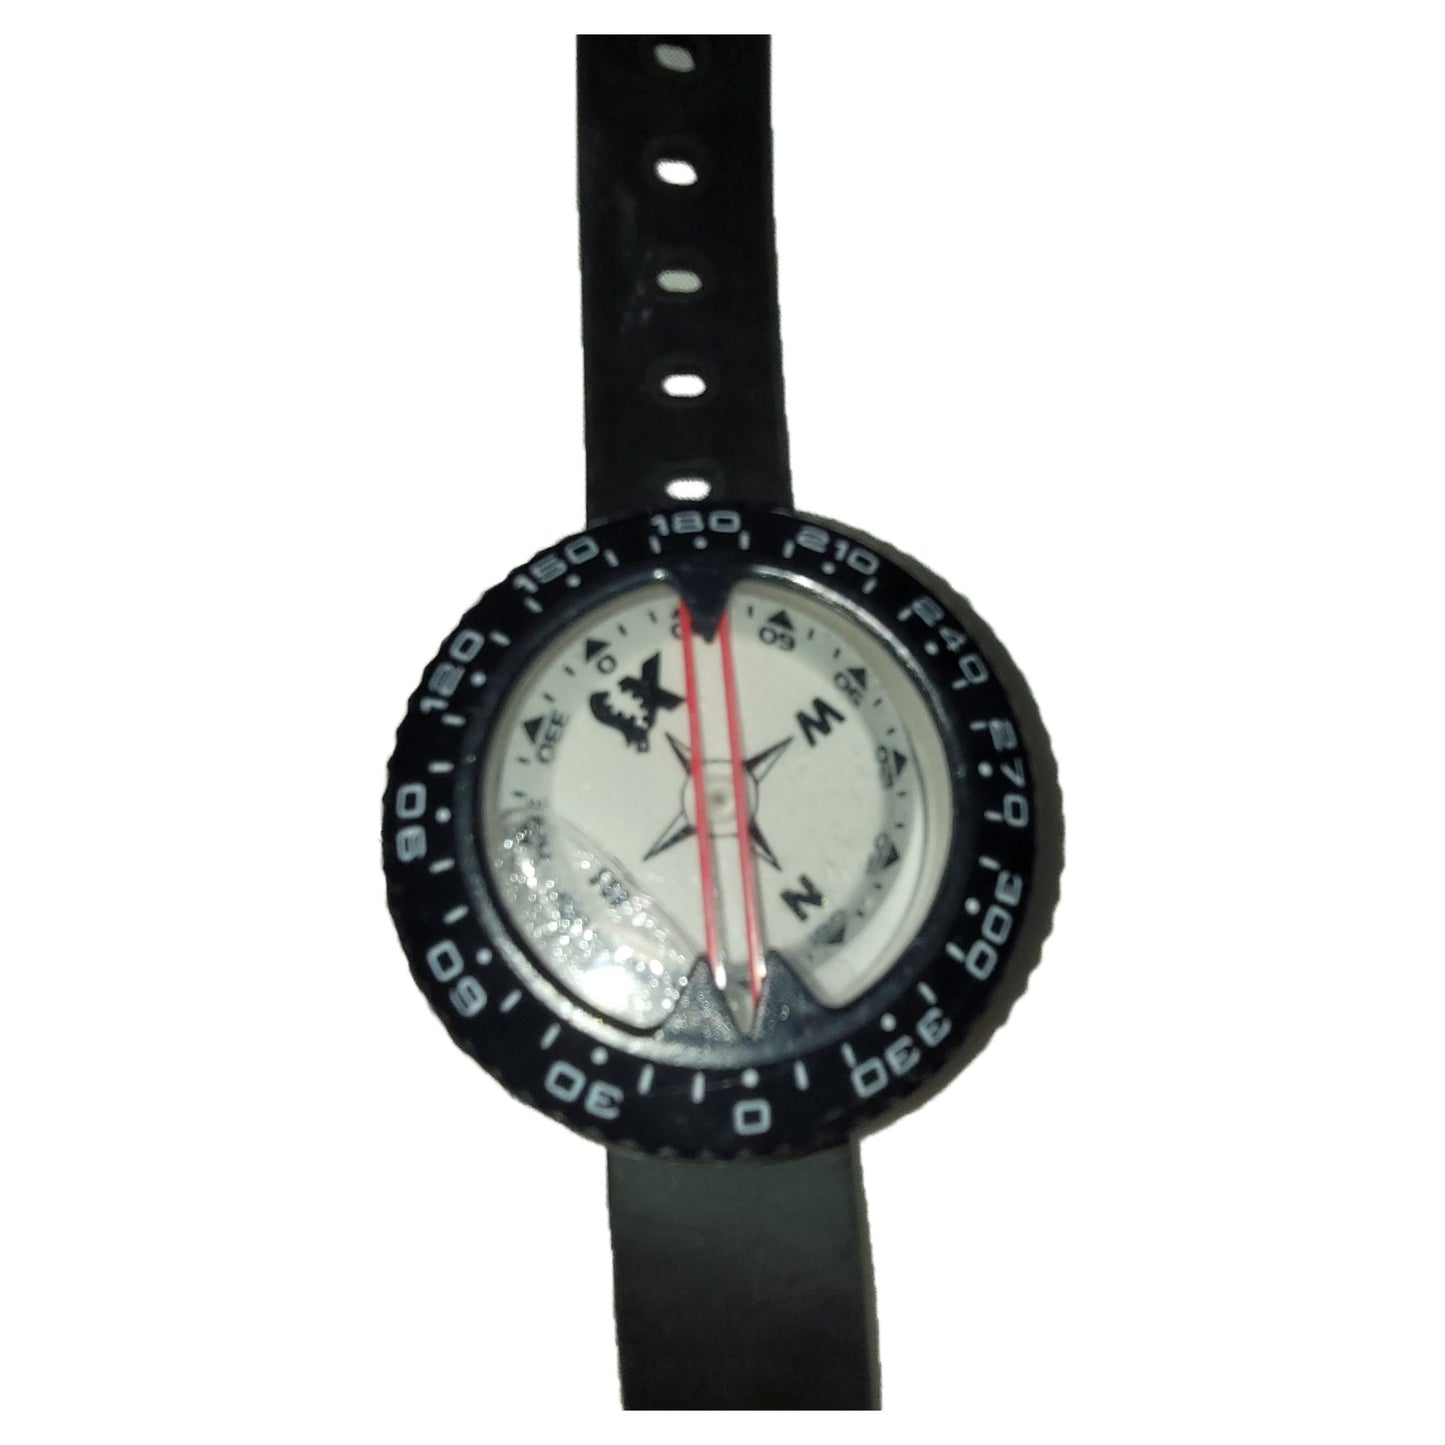 XS Scuba Dive Compass Watch "As Is"